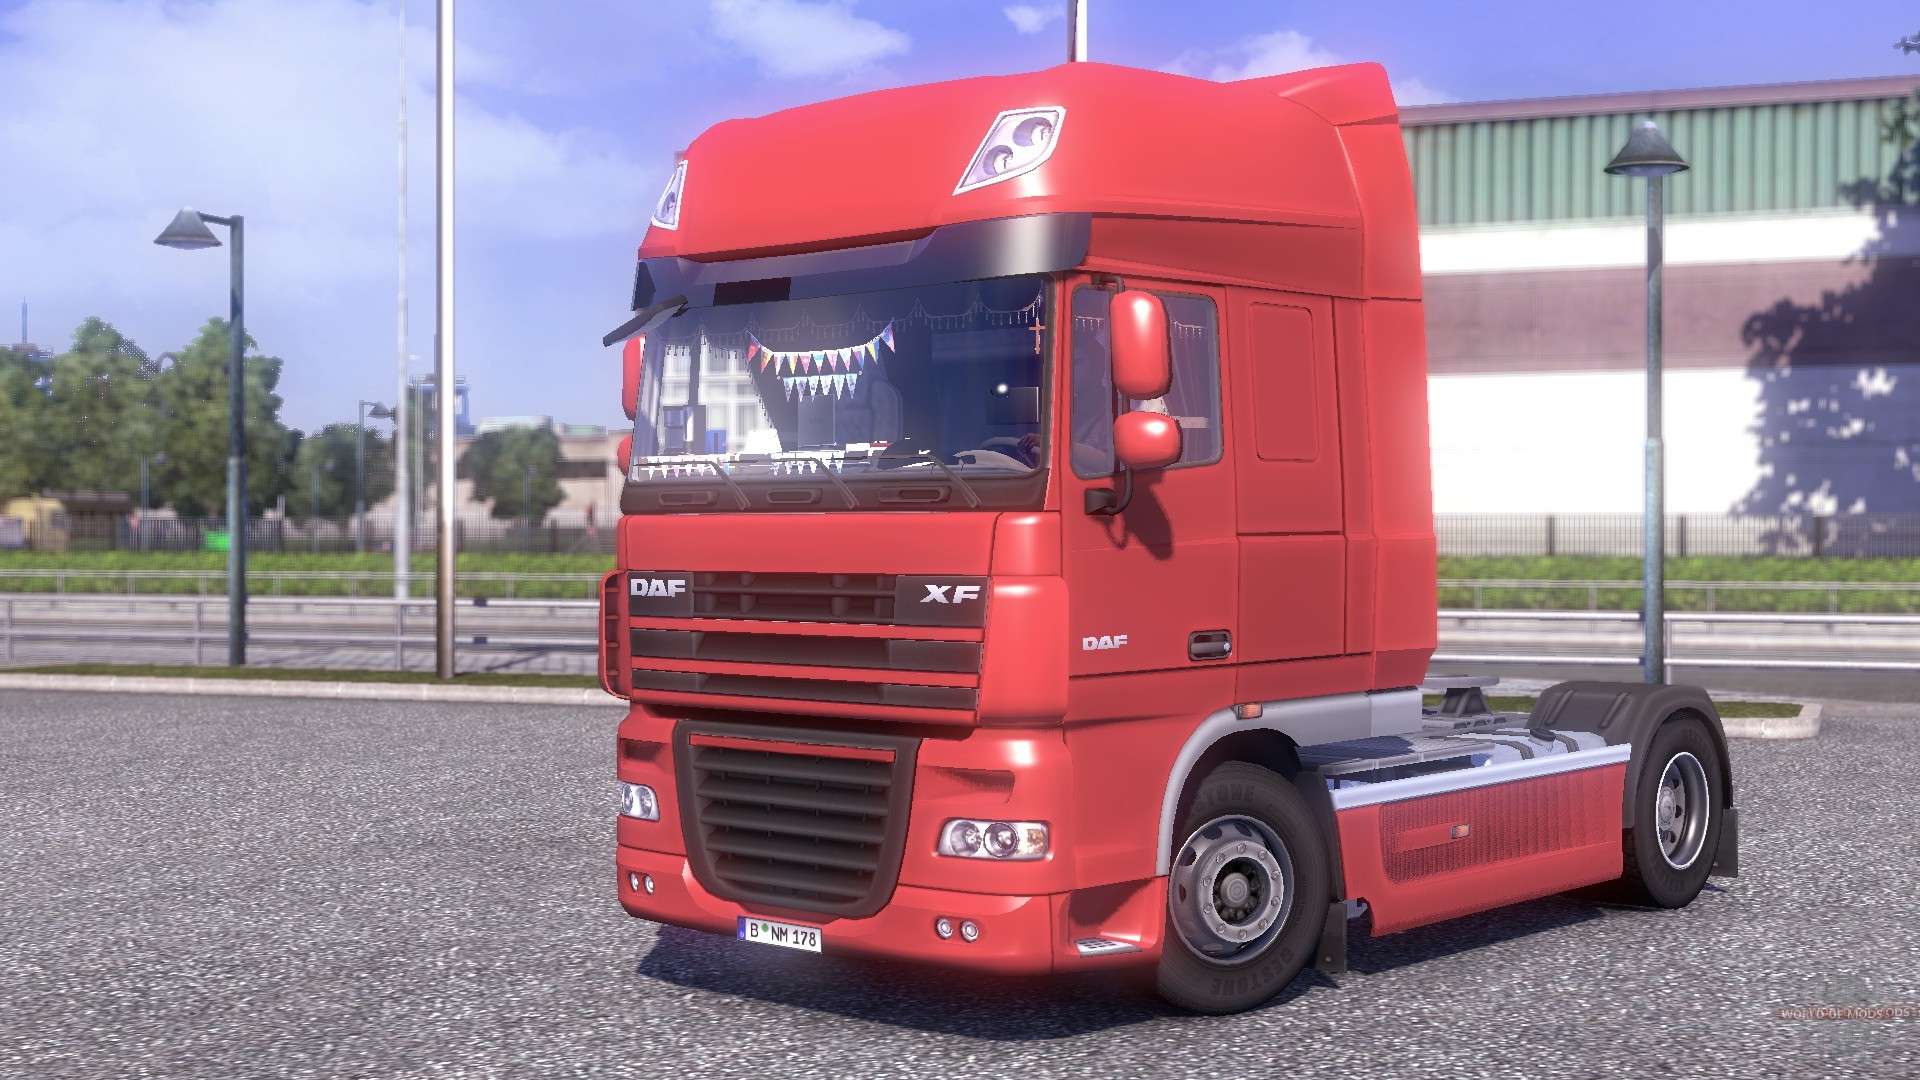 Euro Truck Simulator 2 trucks and cars - download ETS 2 trucks